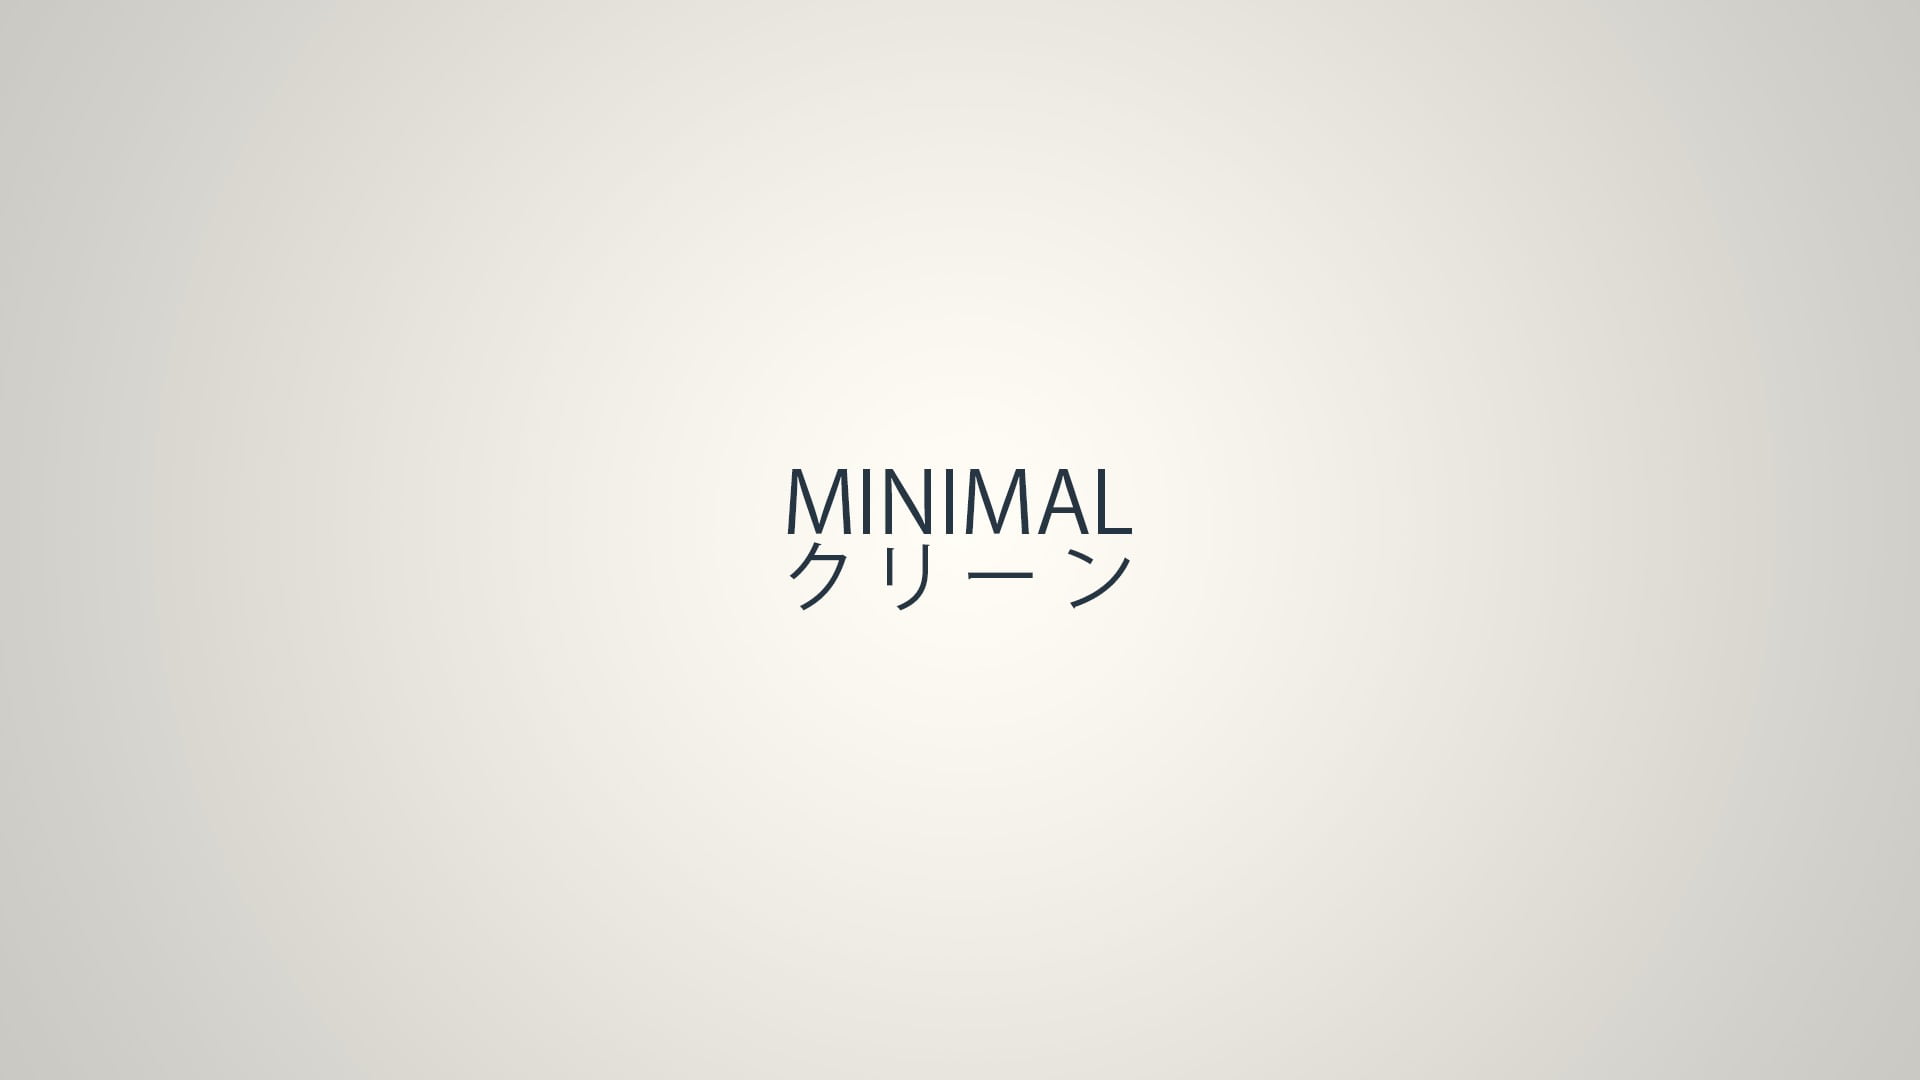 minimalism, text, writing, simple background, gray, communication